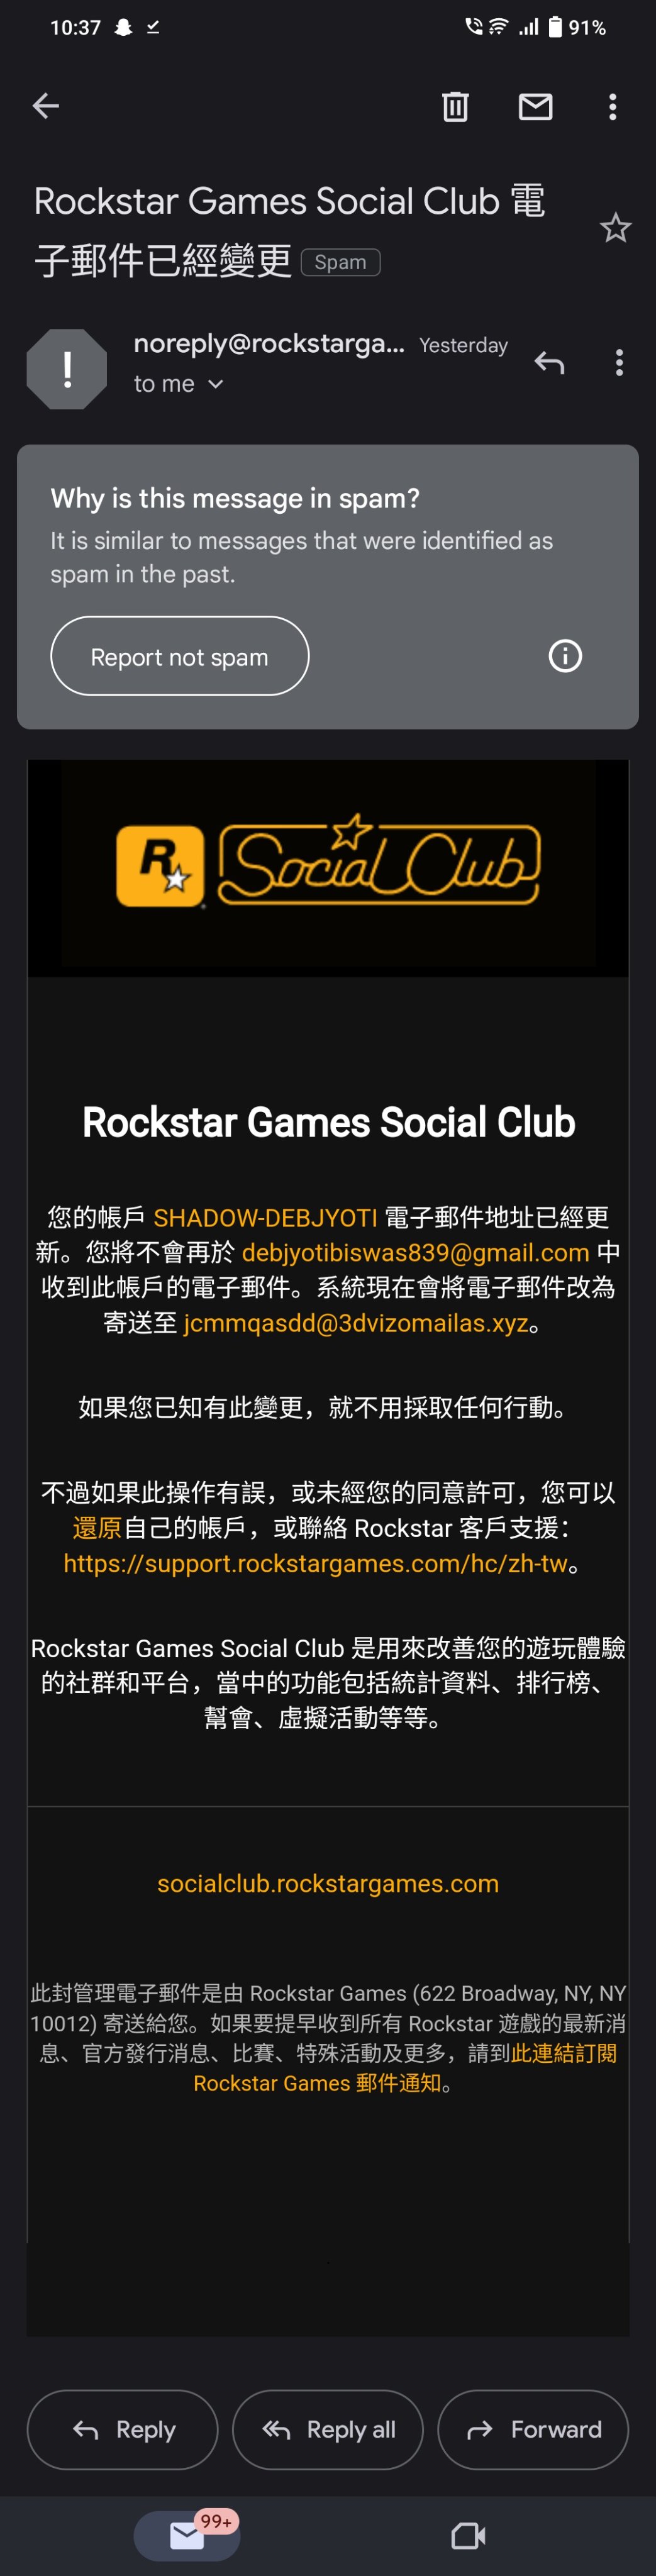 Social Club Account Compromised : r/rockstar